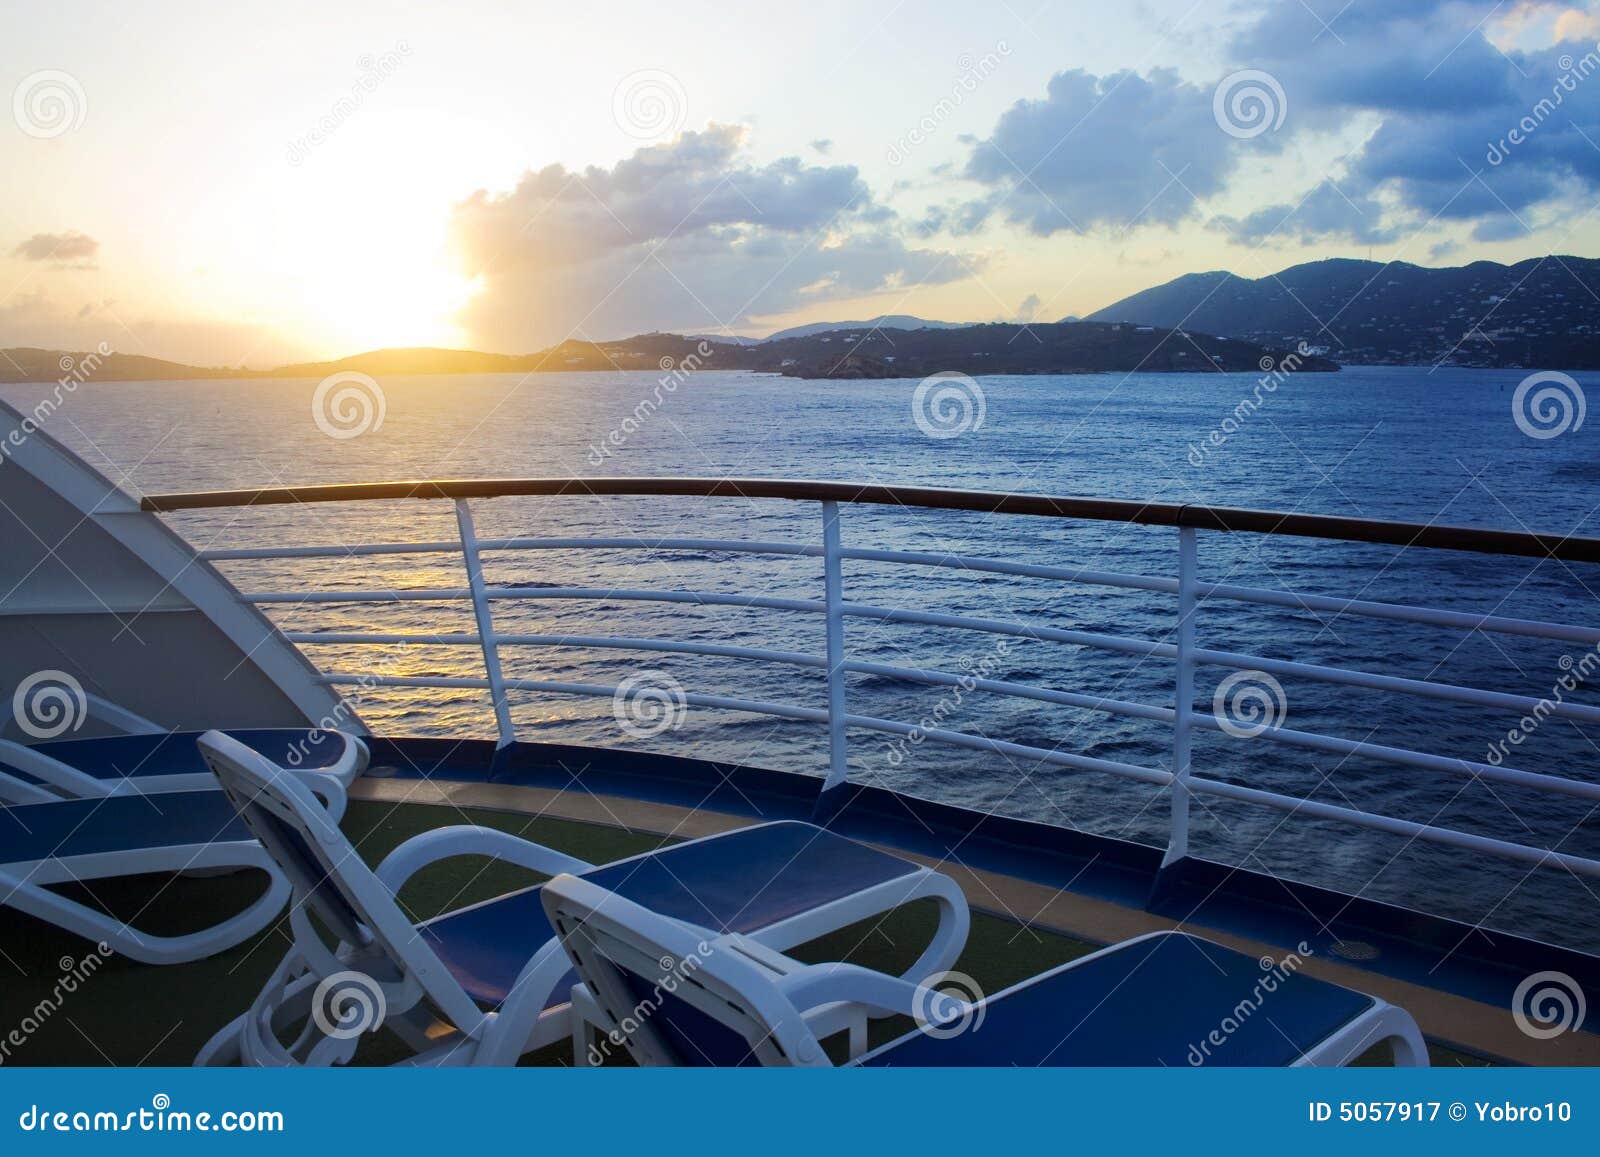 caribbean cruise sunset